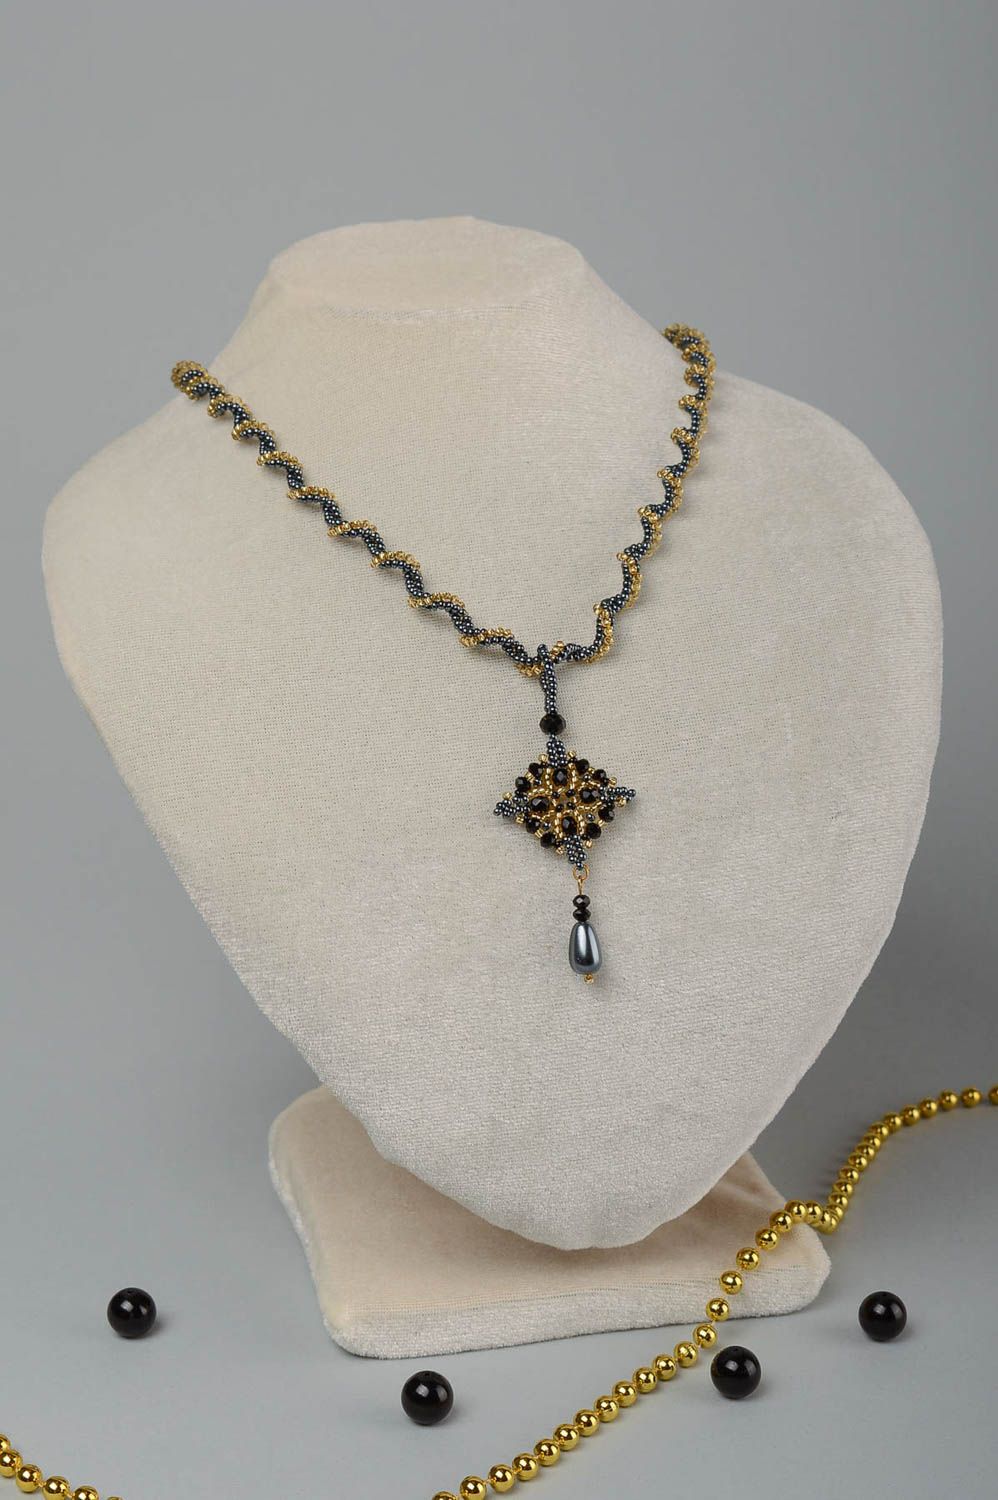 Handcraft necklace seed beads necklace designer accessories elegant bijouterie photo 1